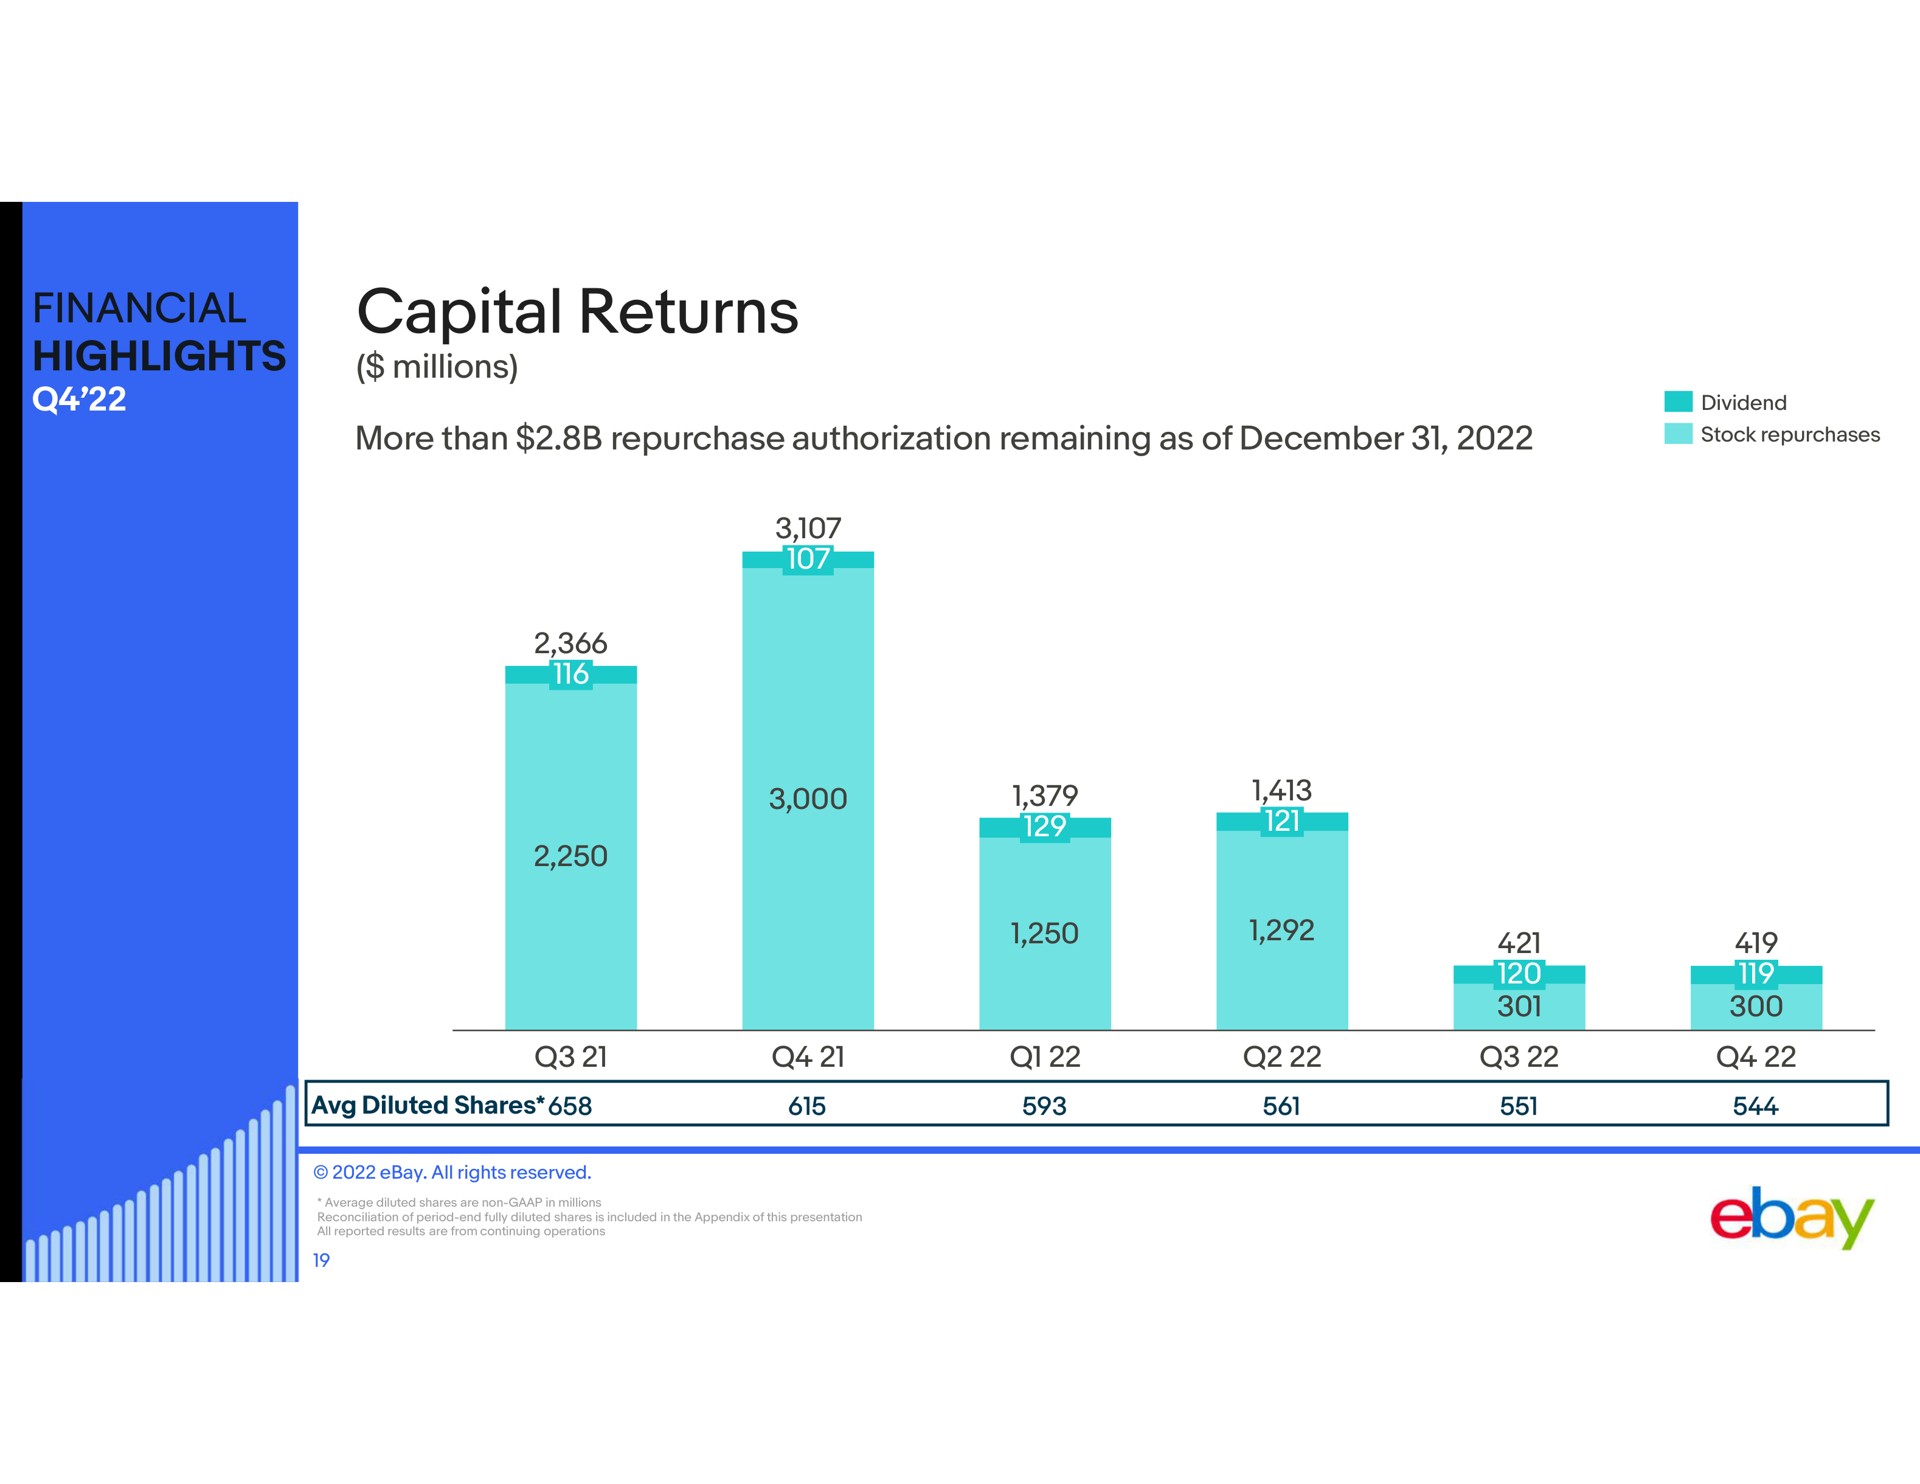 financial highlights capital returns | eBay